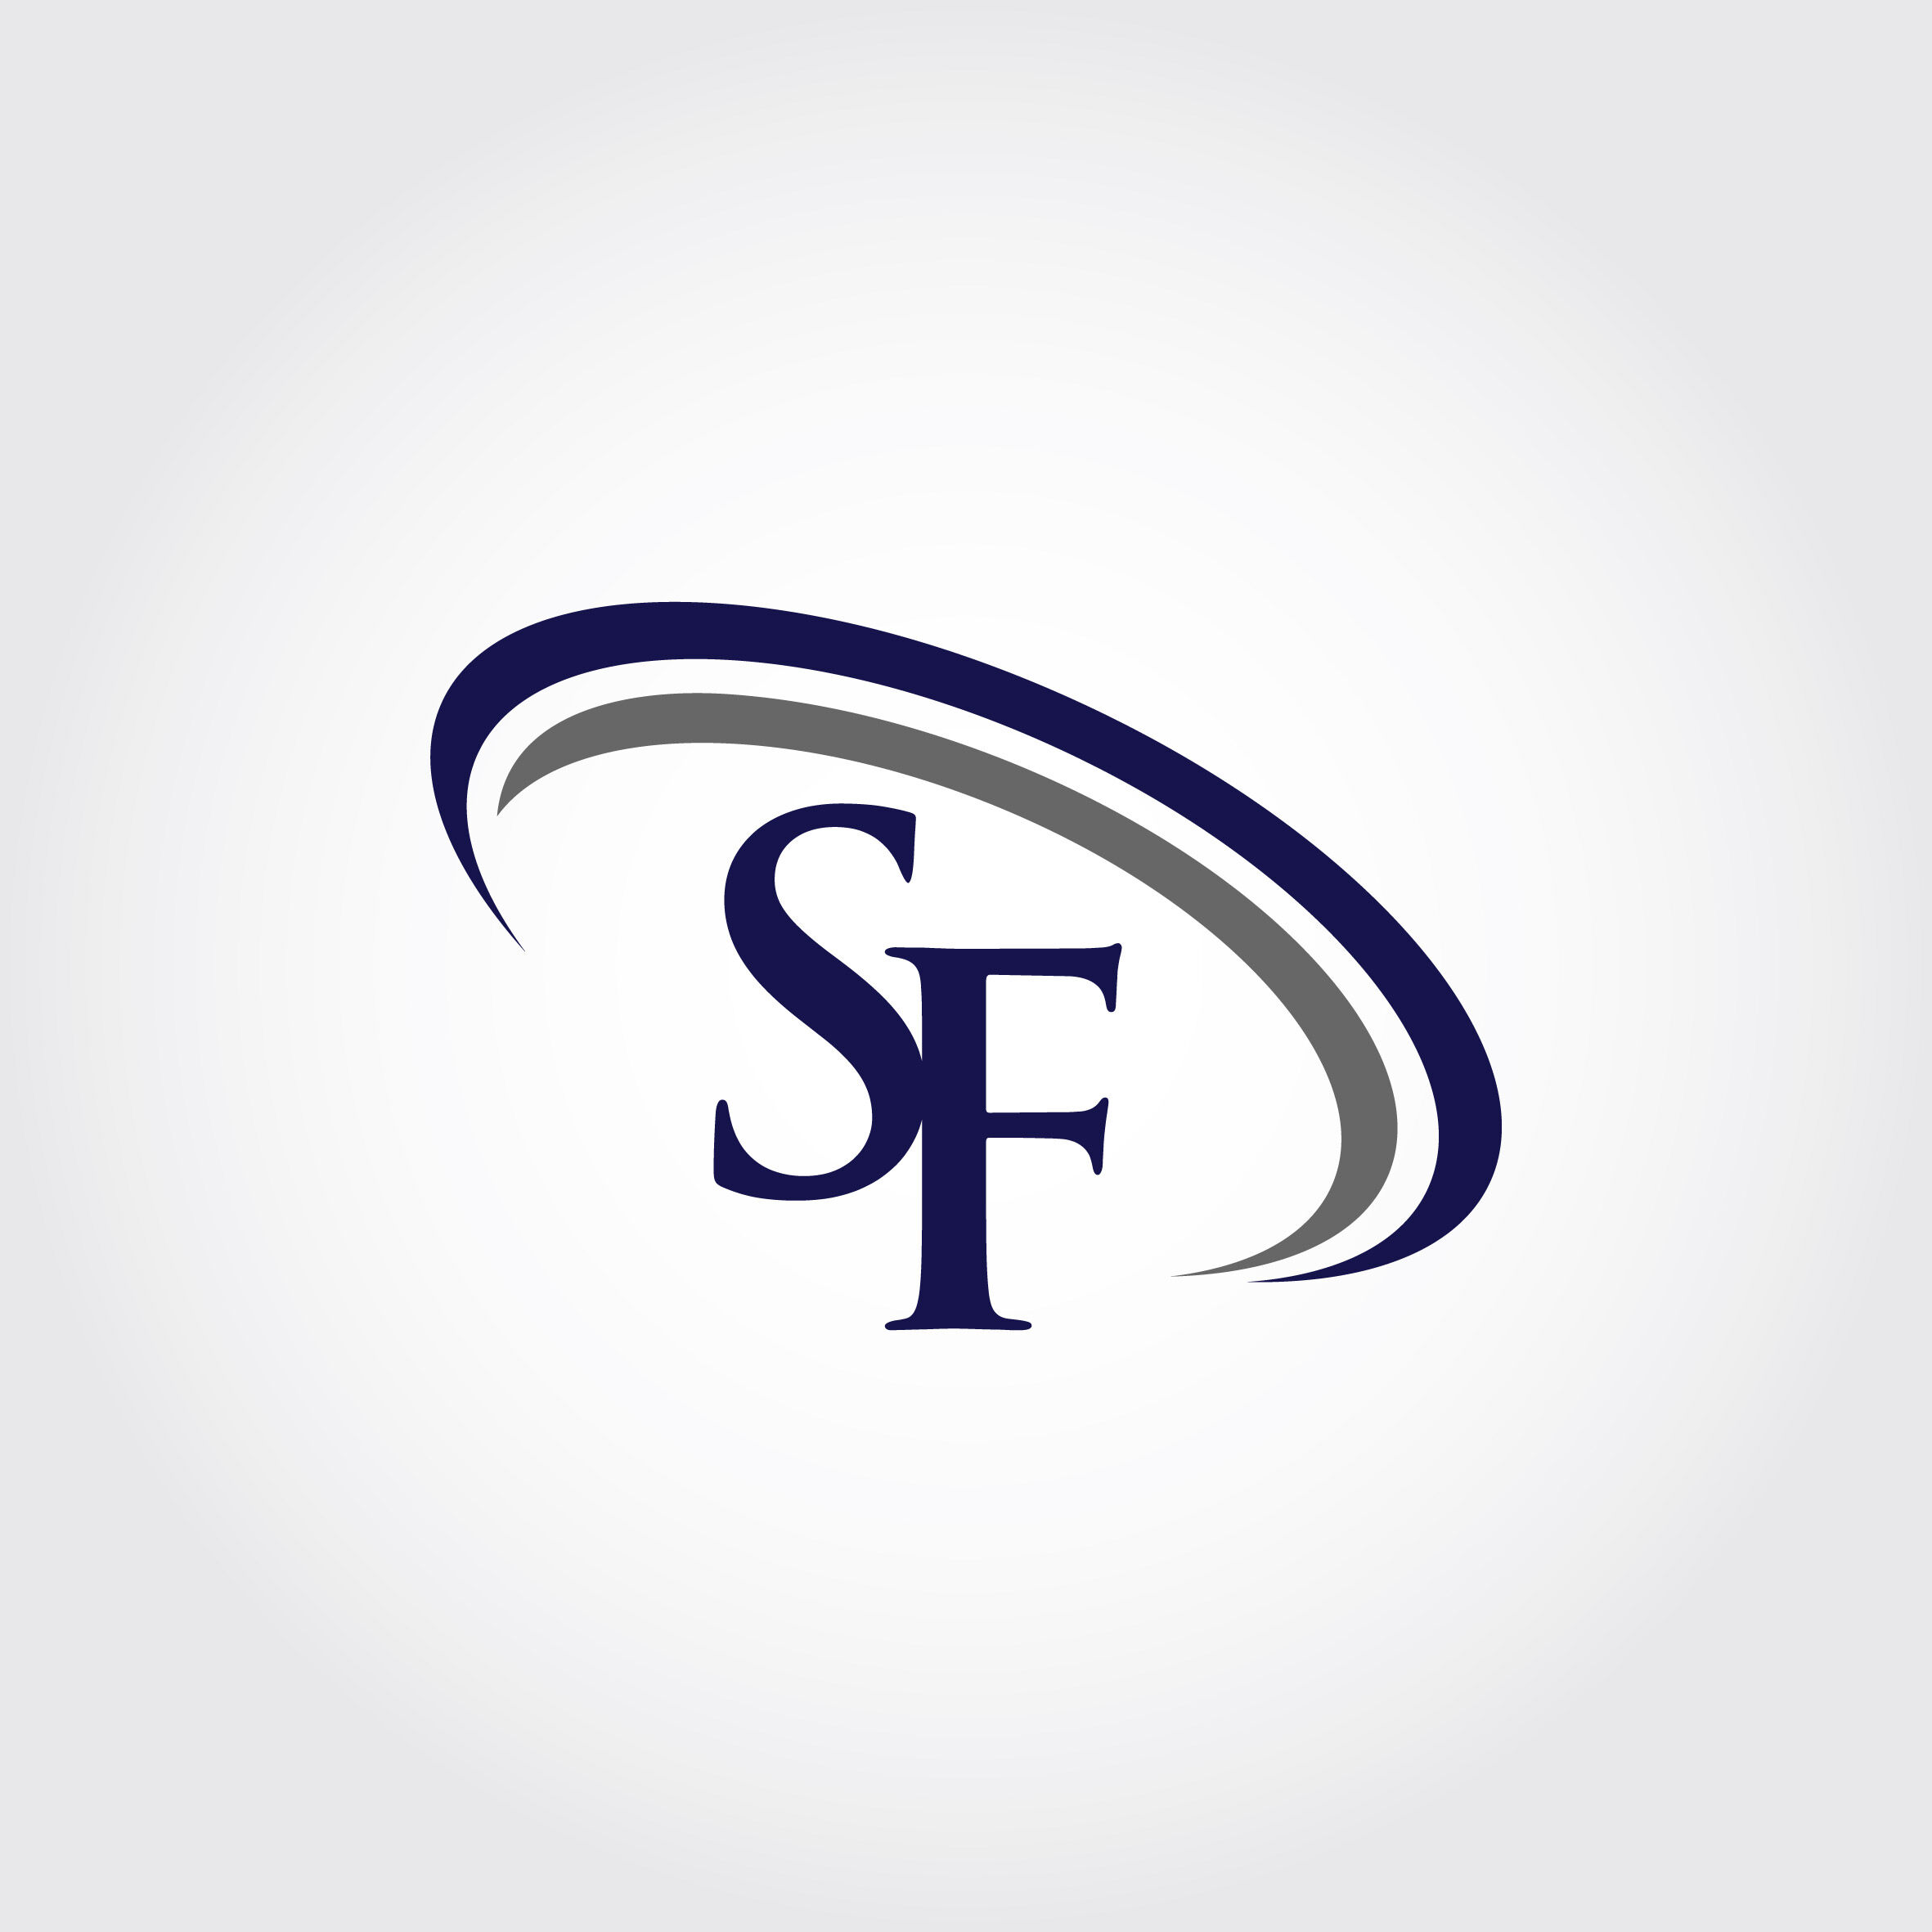 monogram-sf-logo-design-by-vectorseller-thehungryjpeg